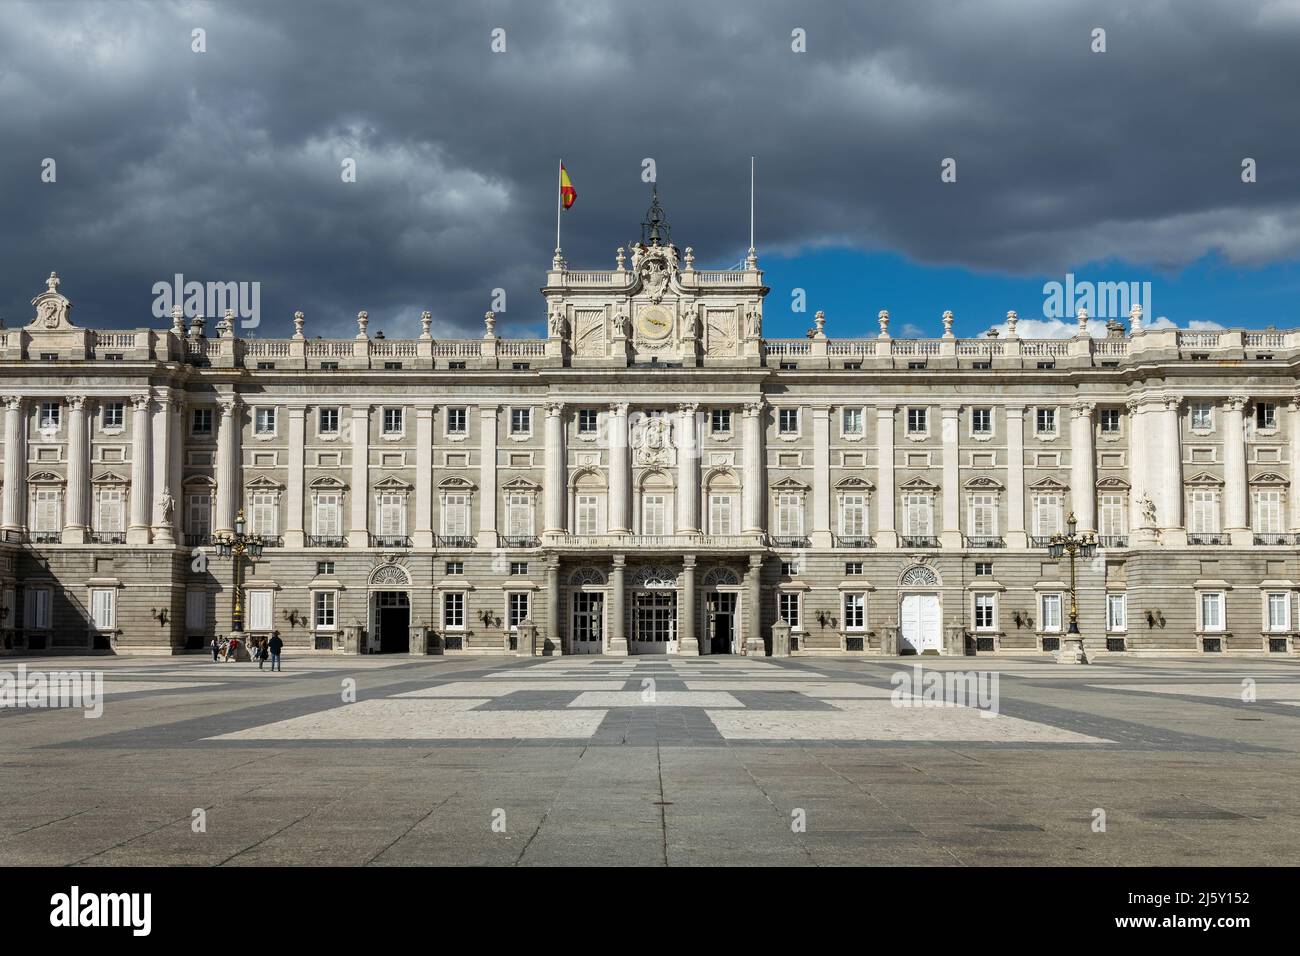 Façade du Palacio Real (Palais Royal) à Madrid, Espagne Banque D'Images